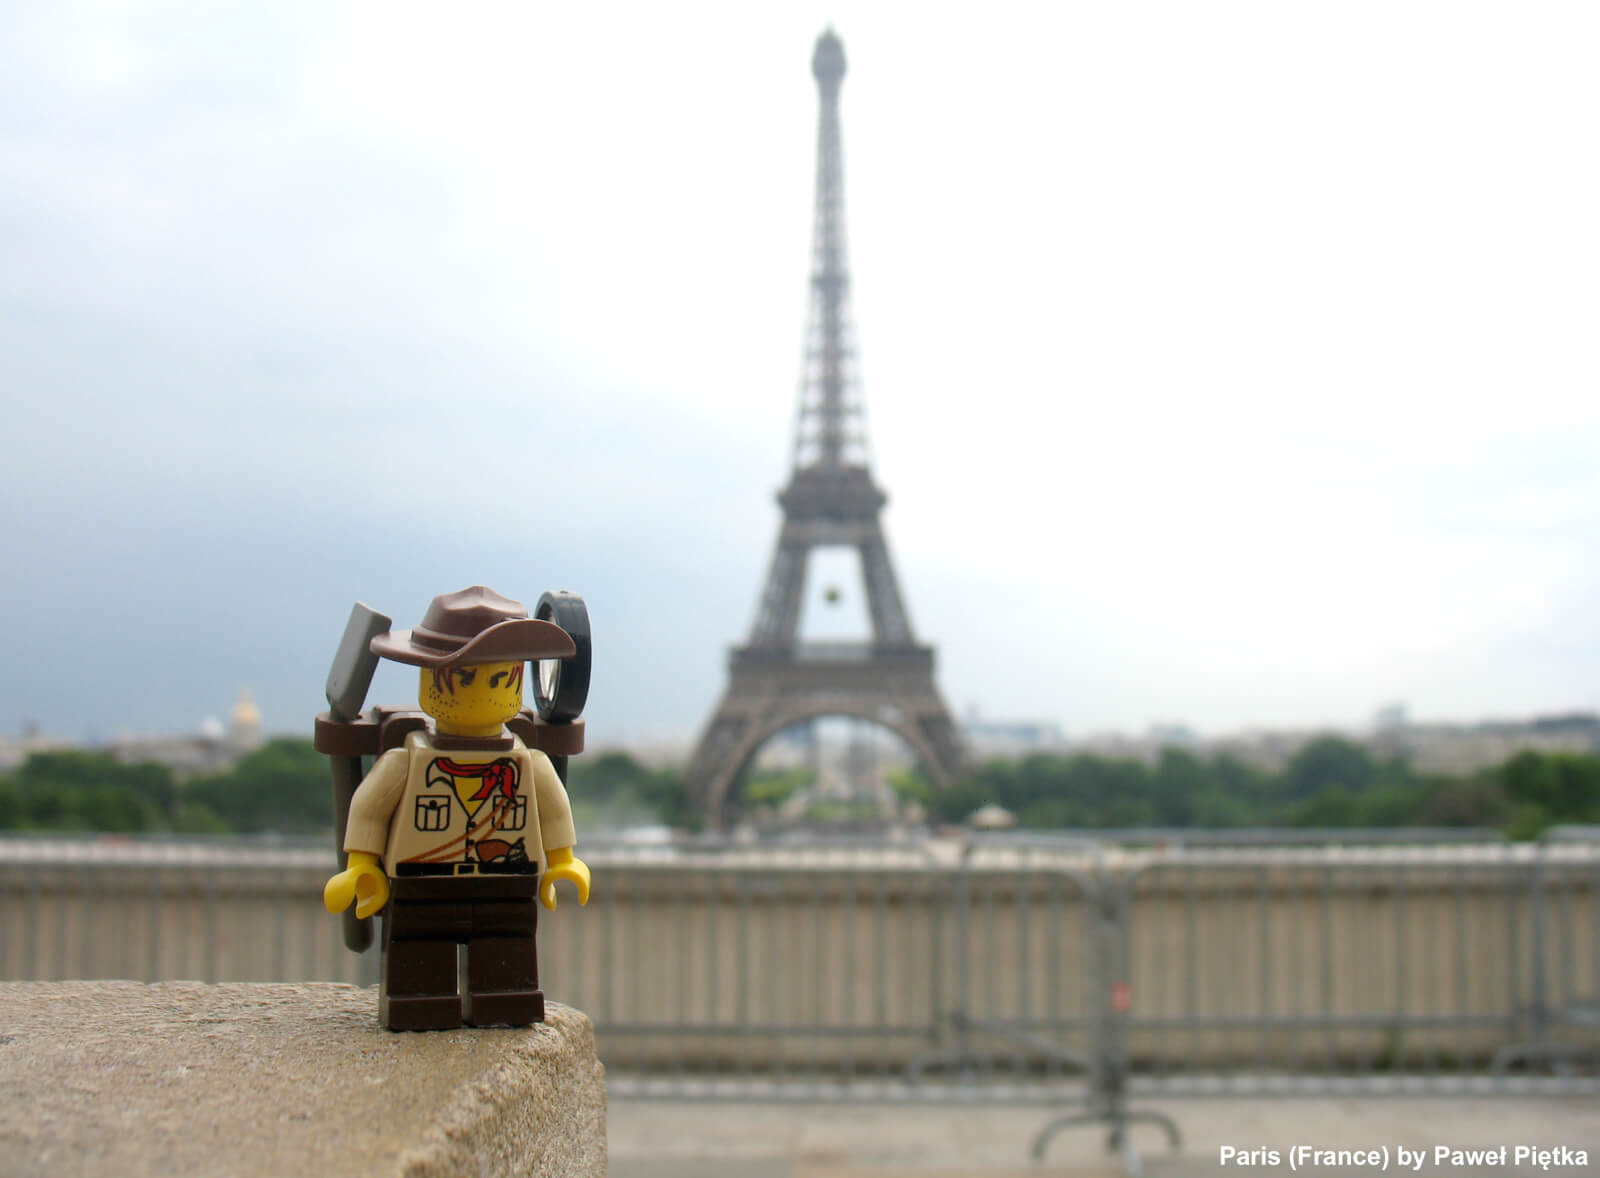 Paris (France) - Eiffel Tower